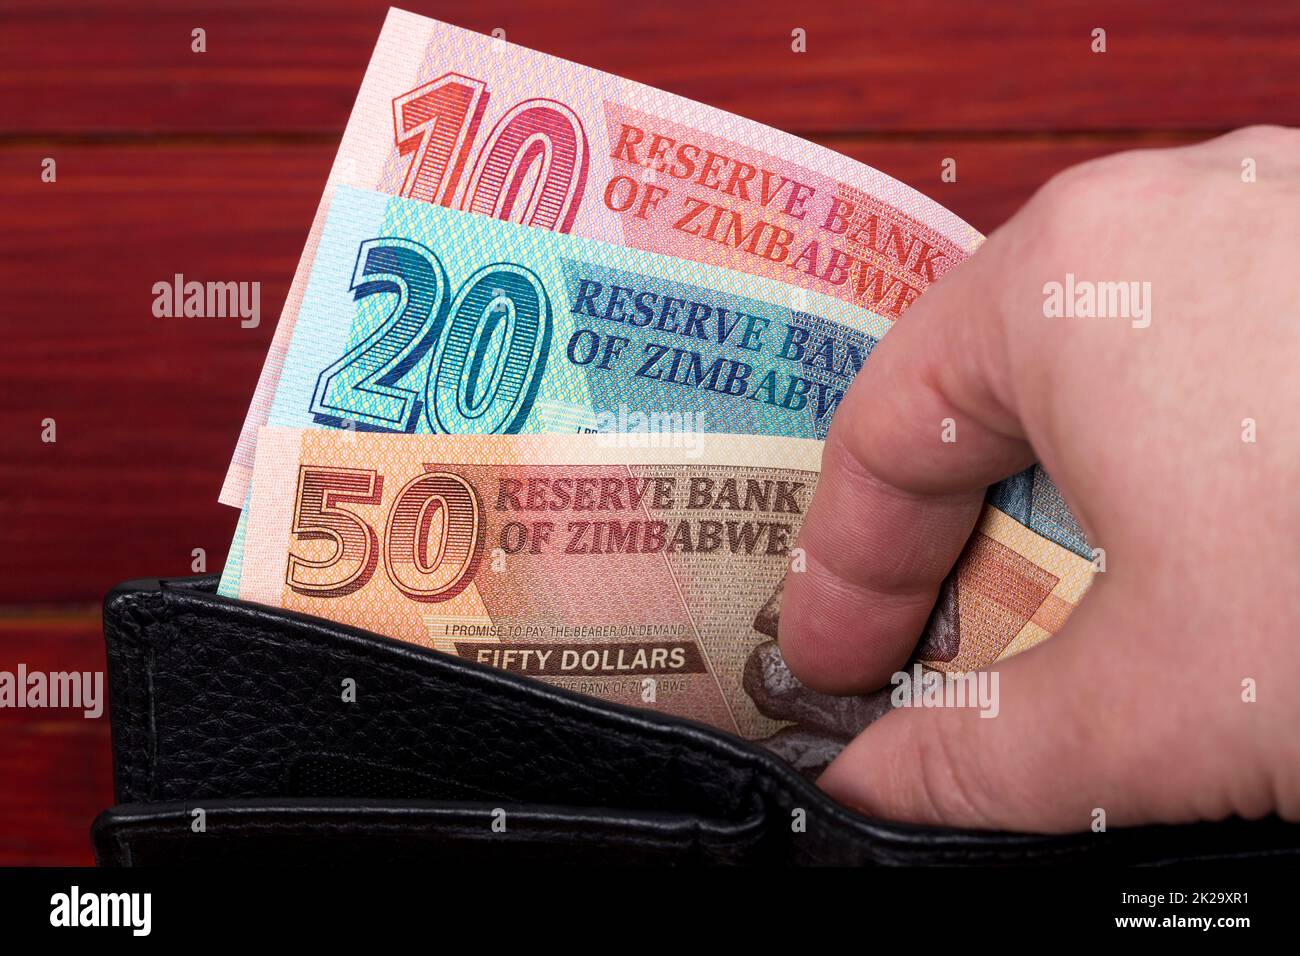 Zimbabwean banknotes in the black wallet Stock Photo